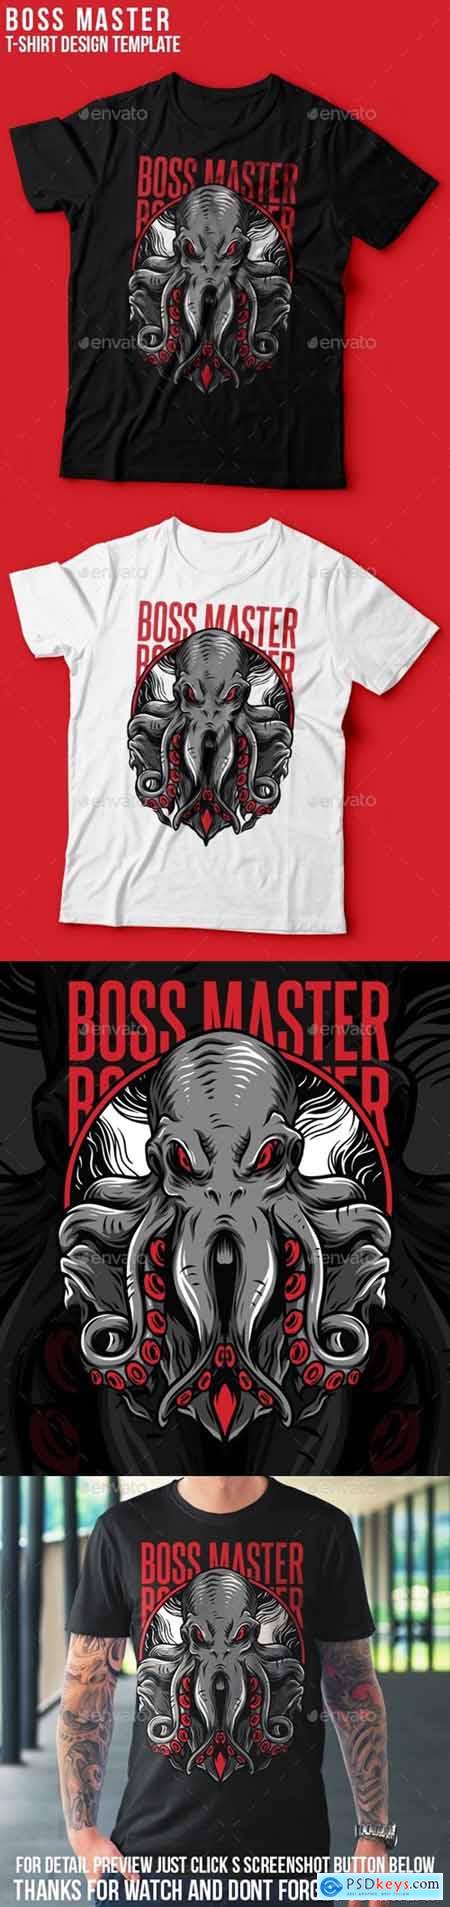 Graphicriver Boss Master T-Shirt Design